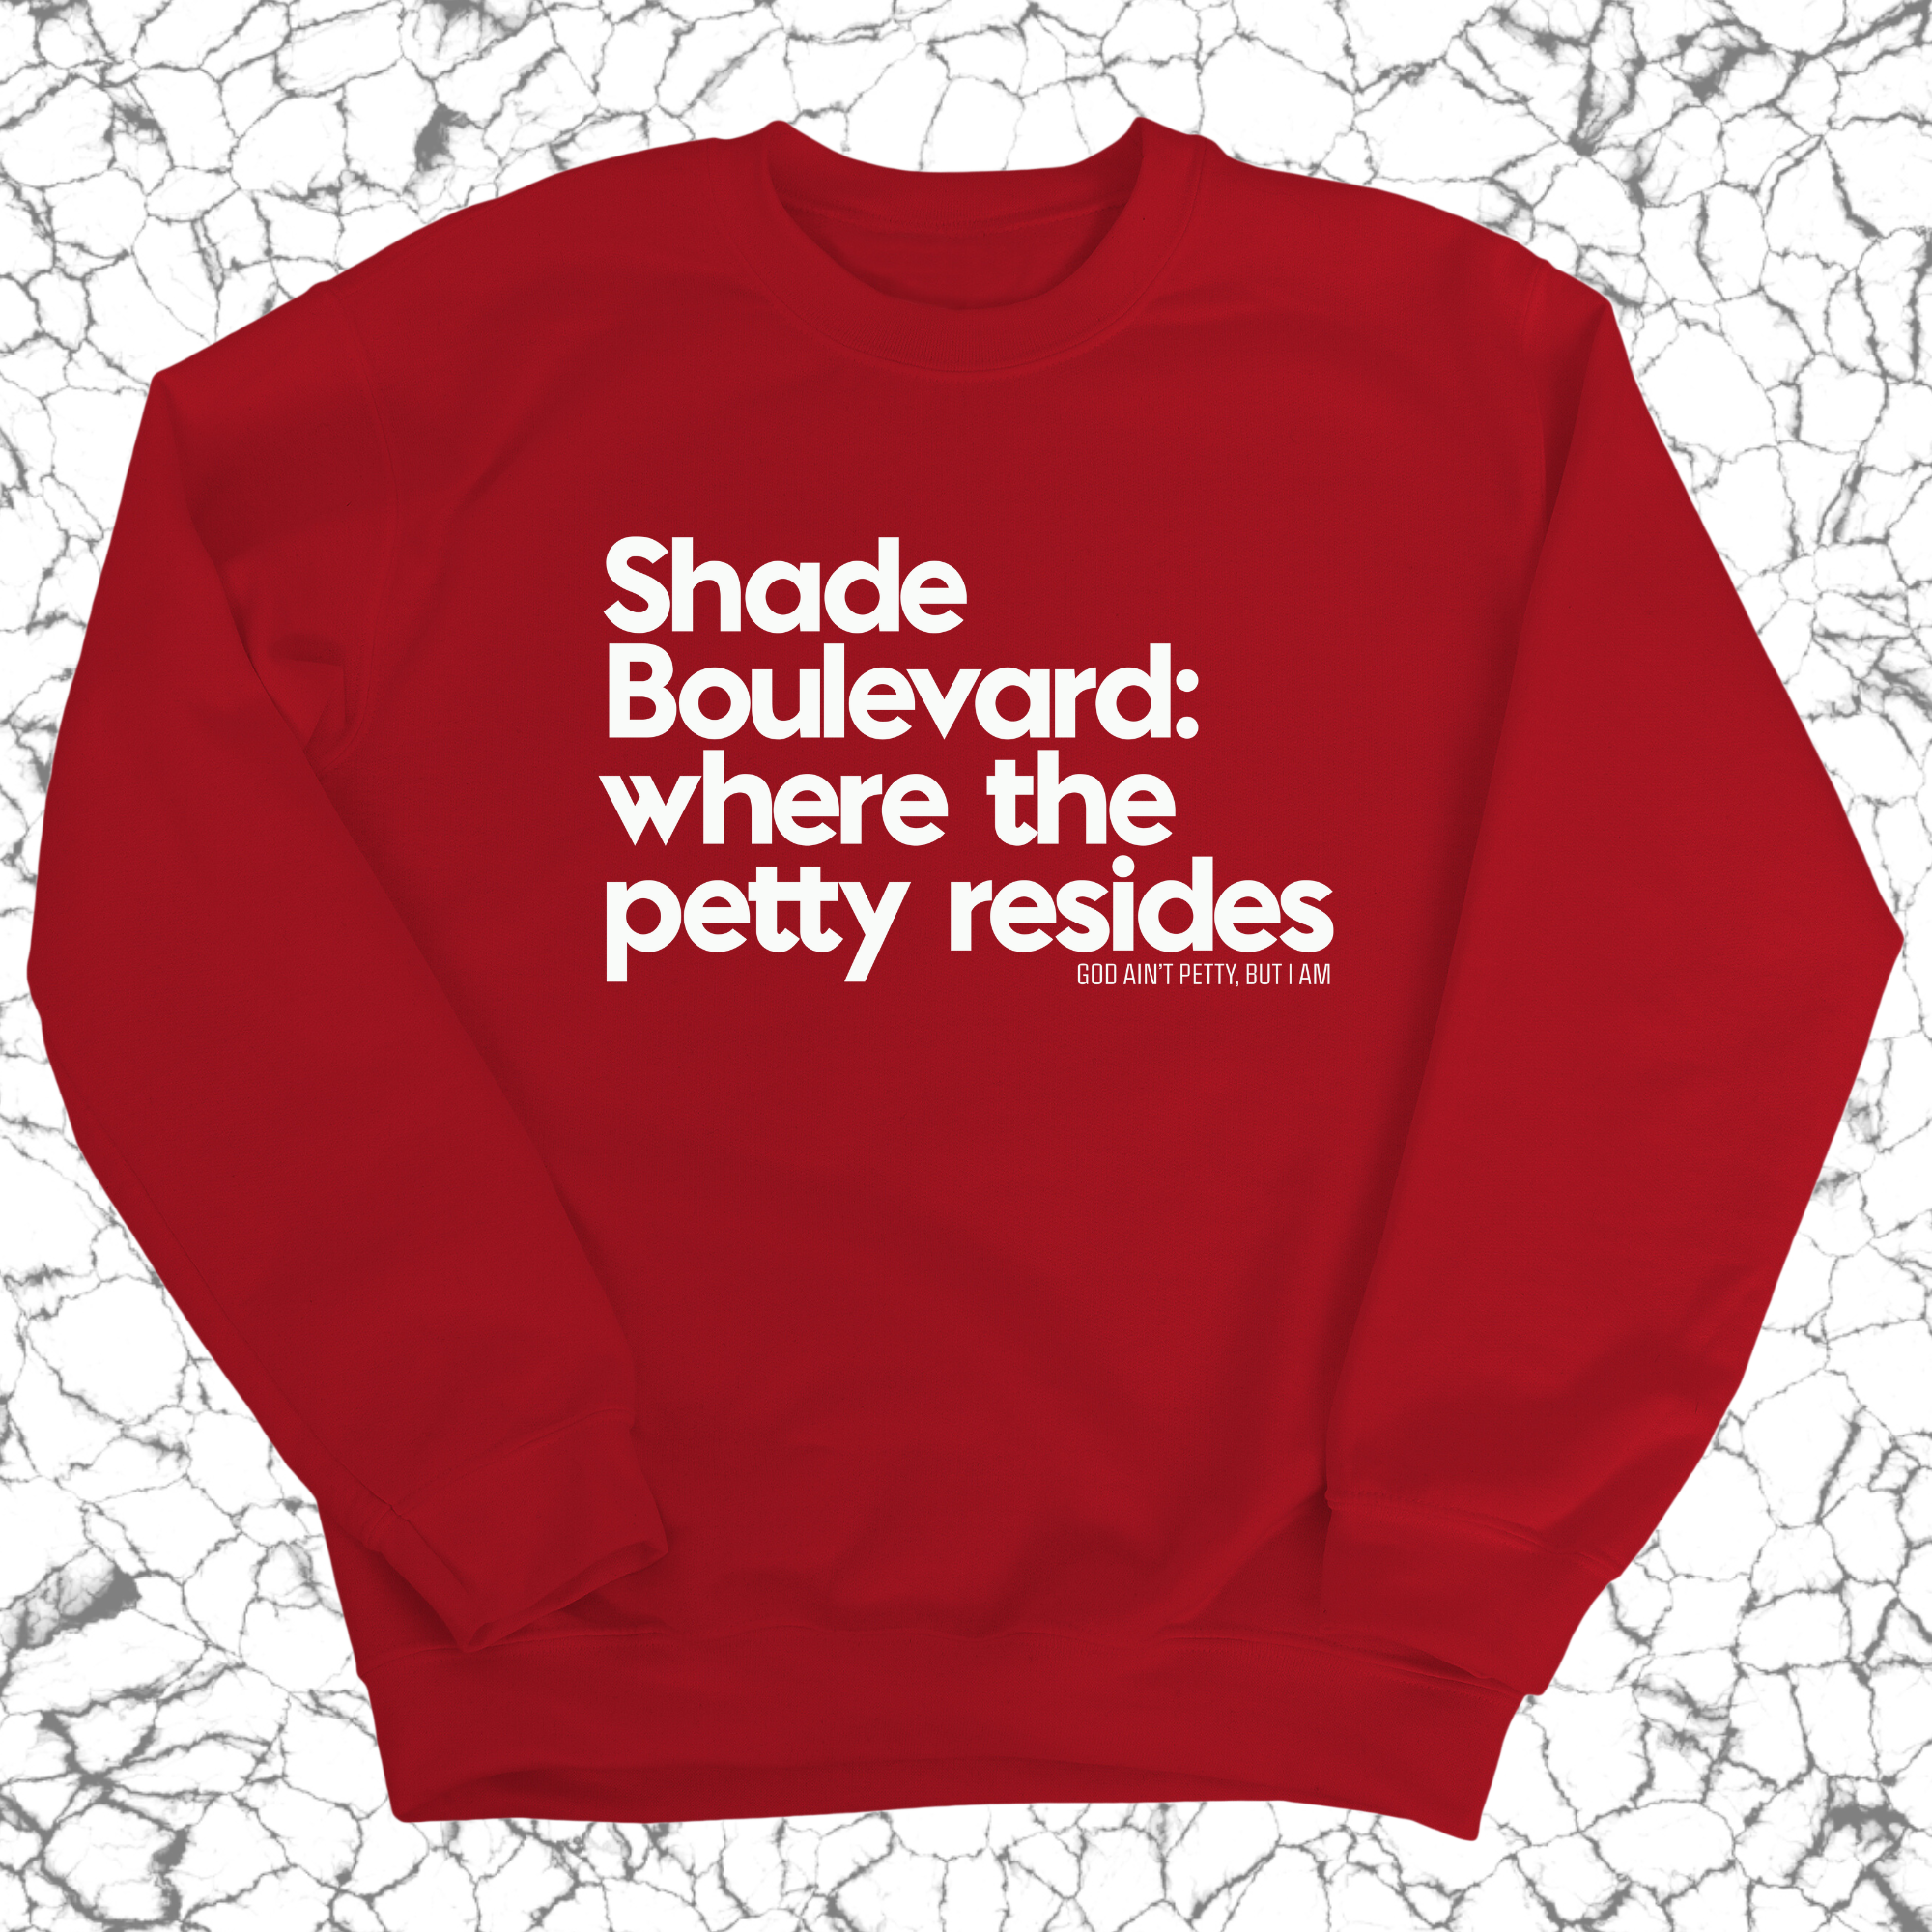 Shade boulevard where the petty resides Unisex Sweatshirt-Sweatshirt-The Original God Ain't Petty But I Am